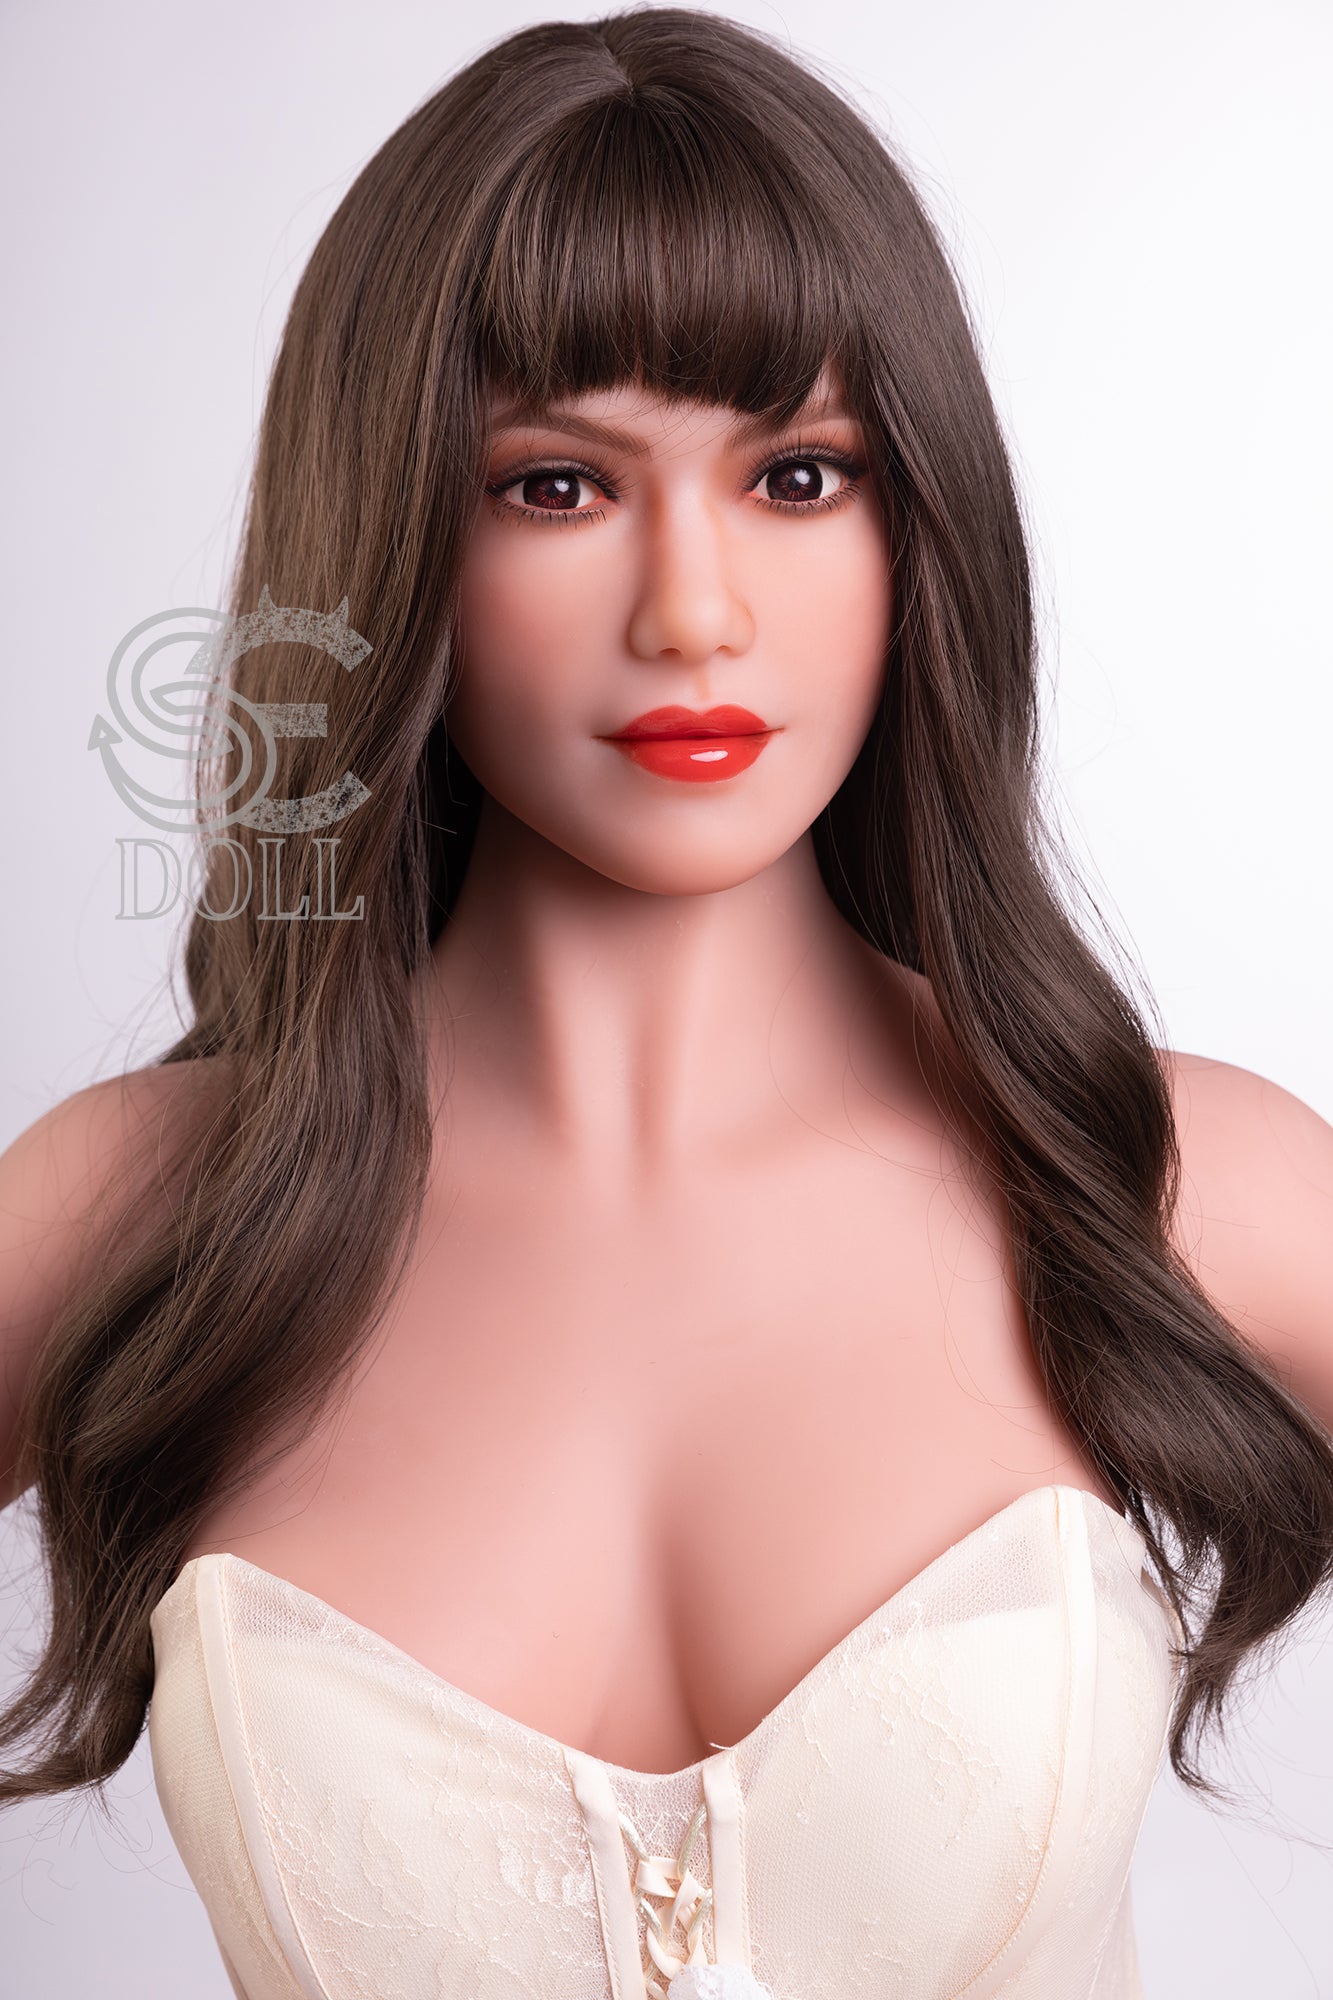 SEDOLL 163 cm E TPE - Mirela | Buy Sex Dolls at DOLLS ACTUALLY